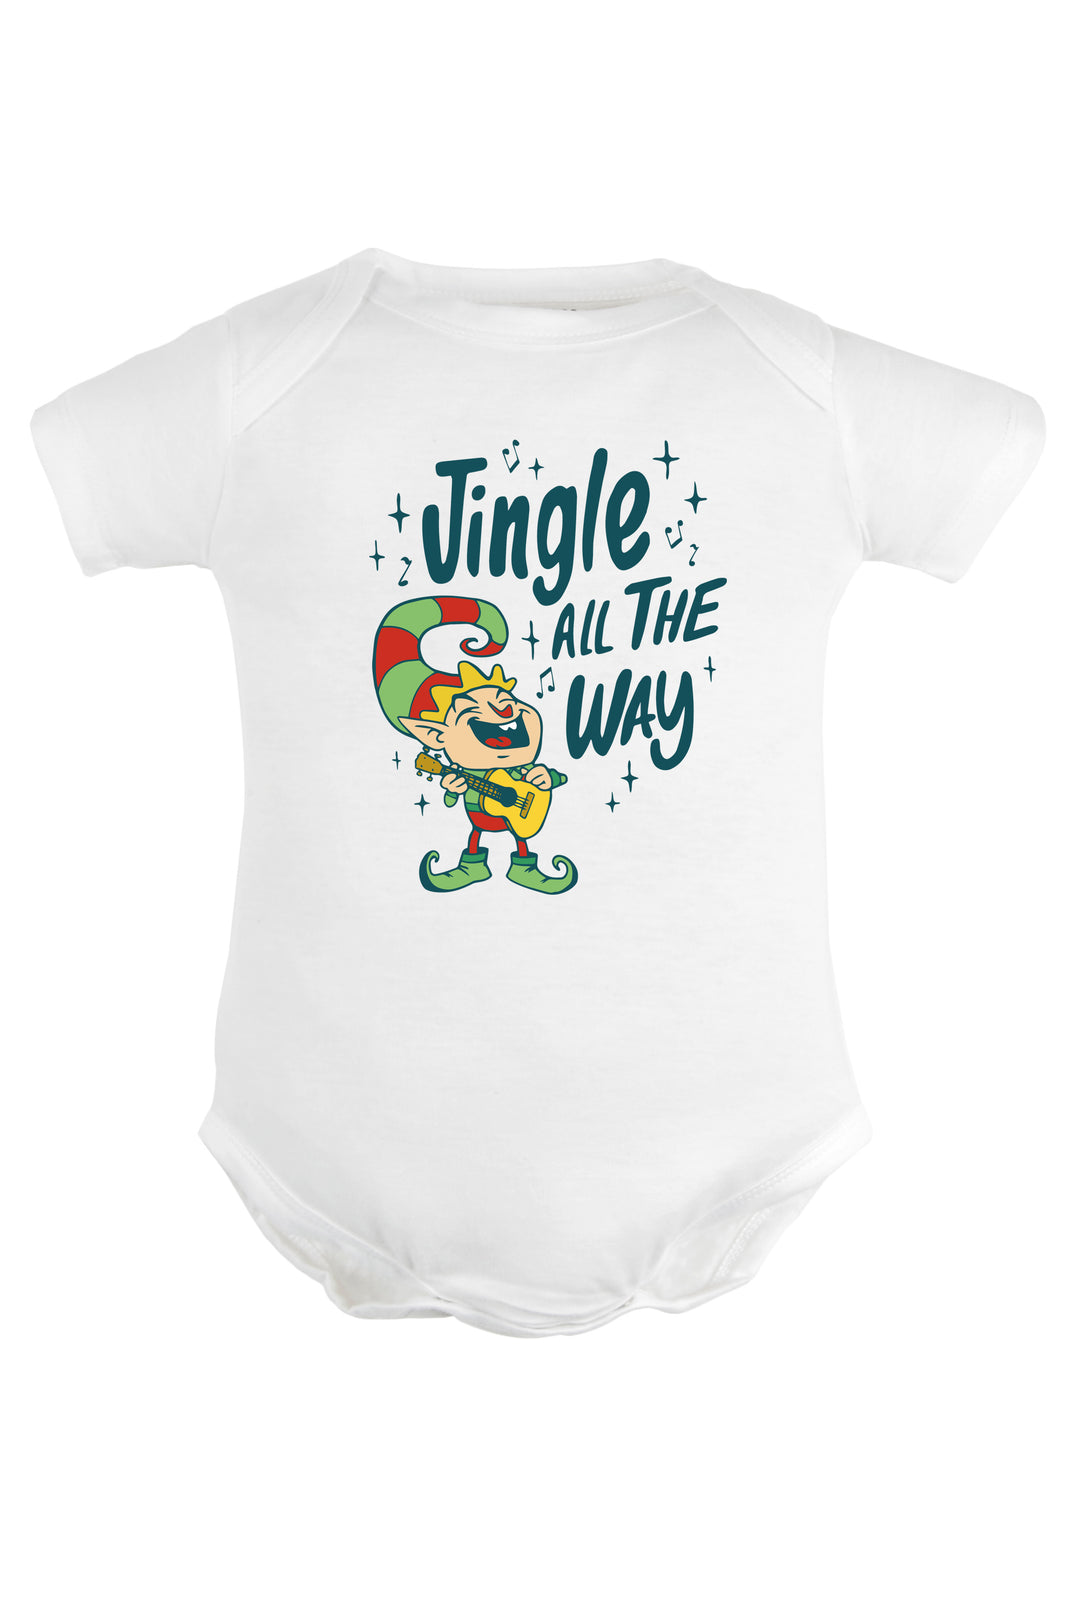 Jingle all the way Baby Romper | Onesies